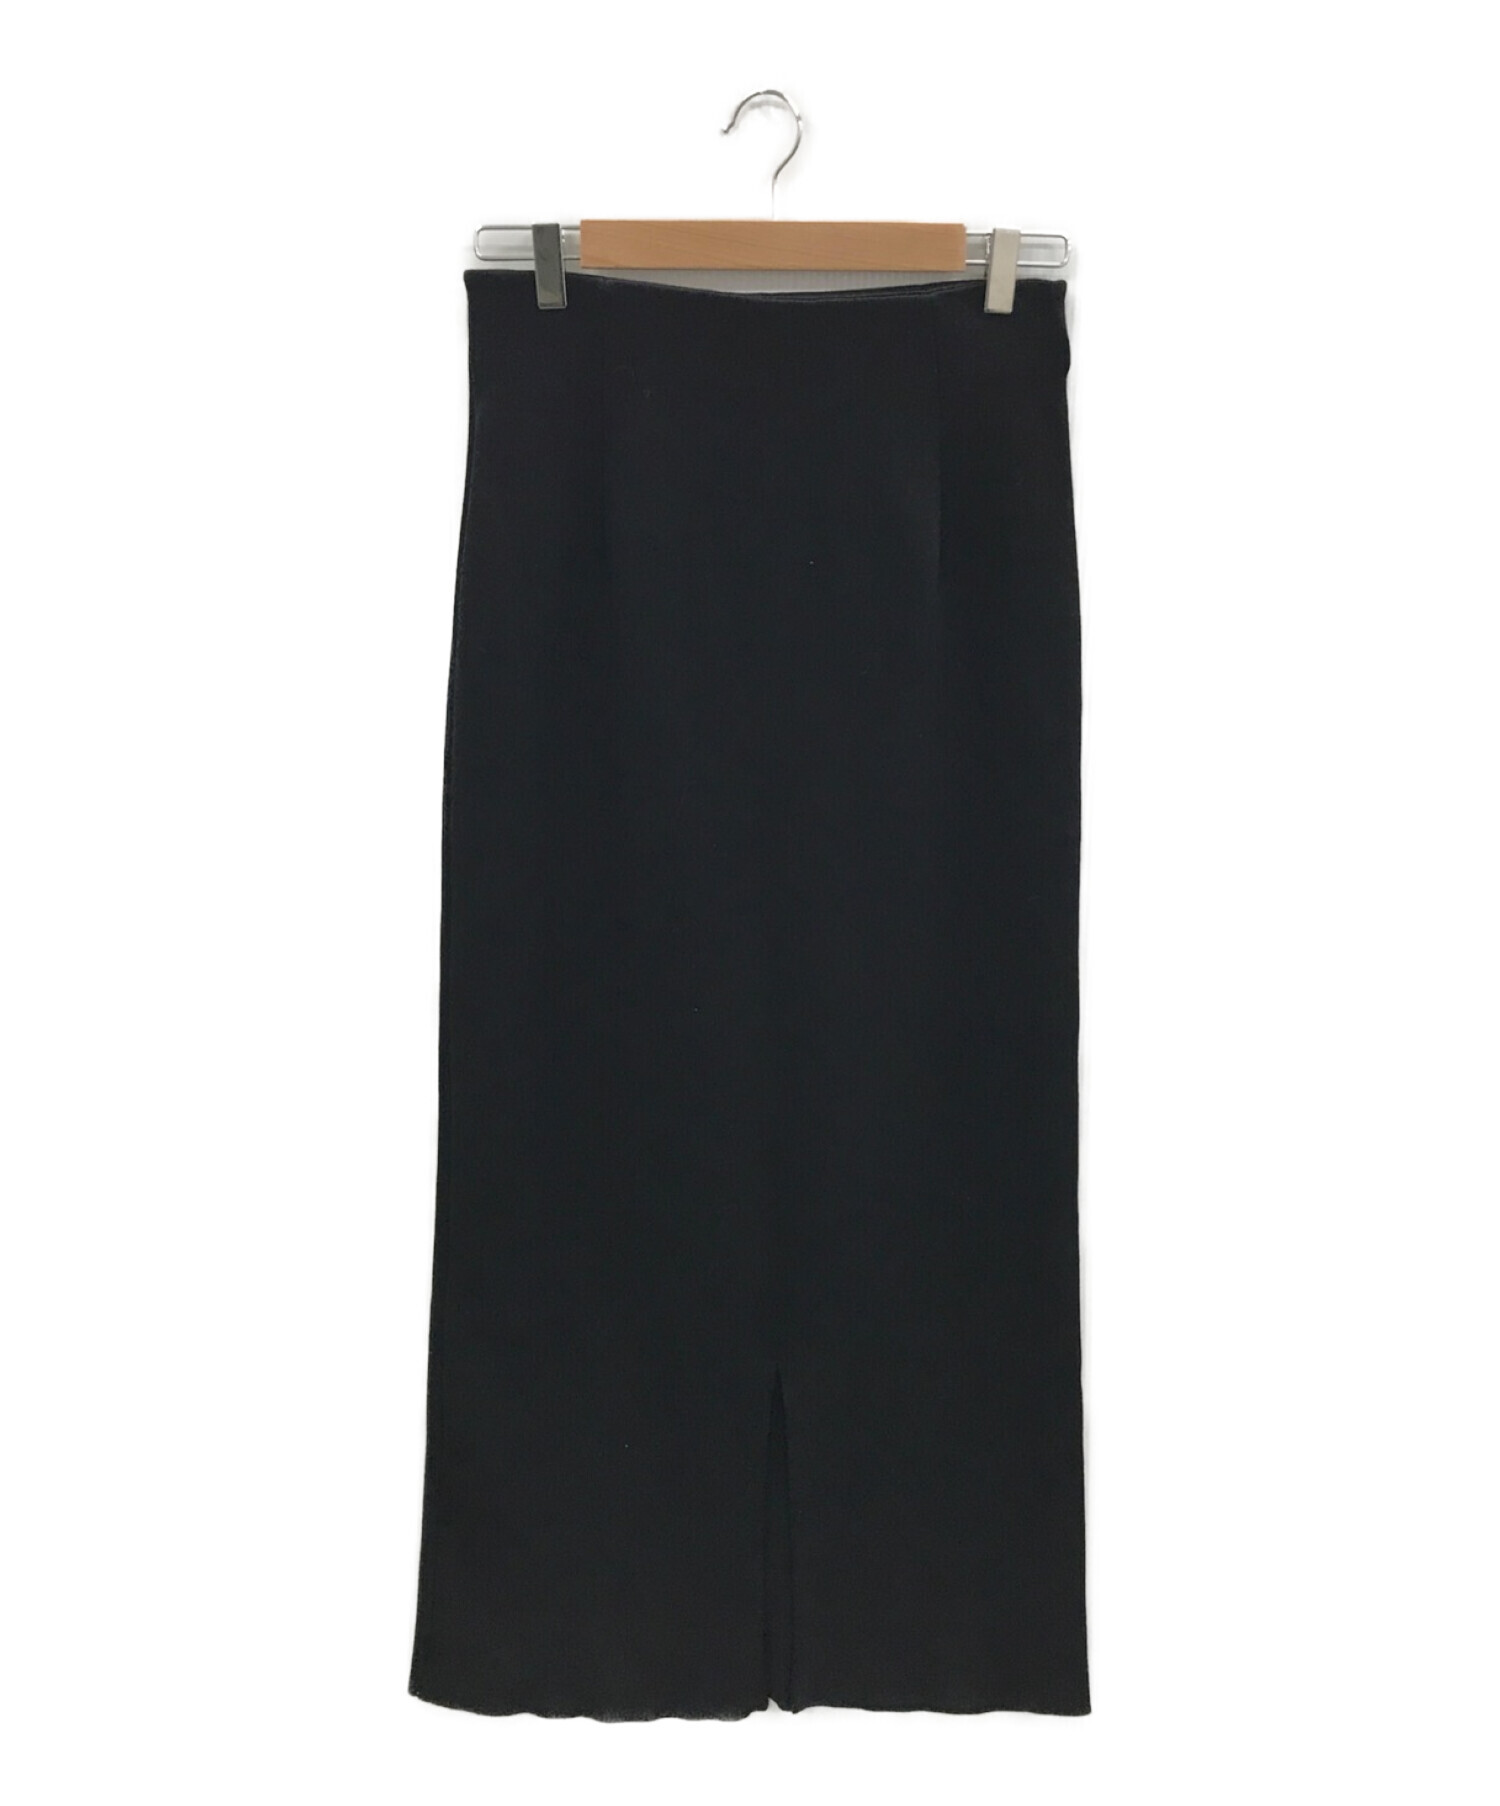 FRAMeWORK (フレームワーク) スムースタイトロングスカート ブラック サイズ:38